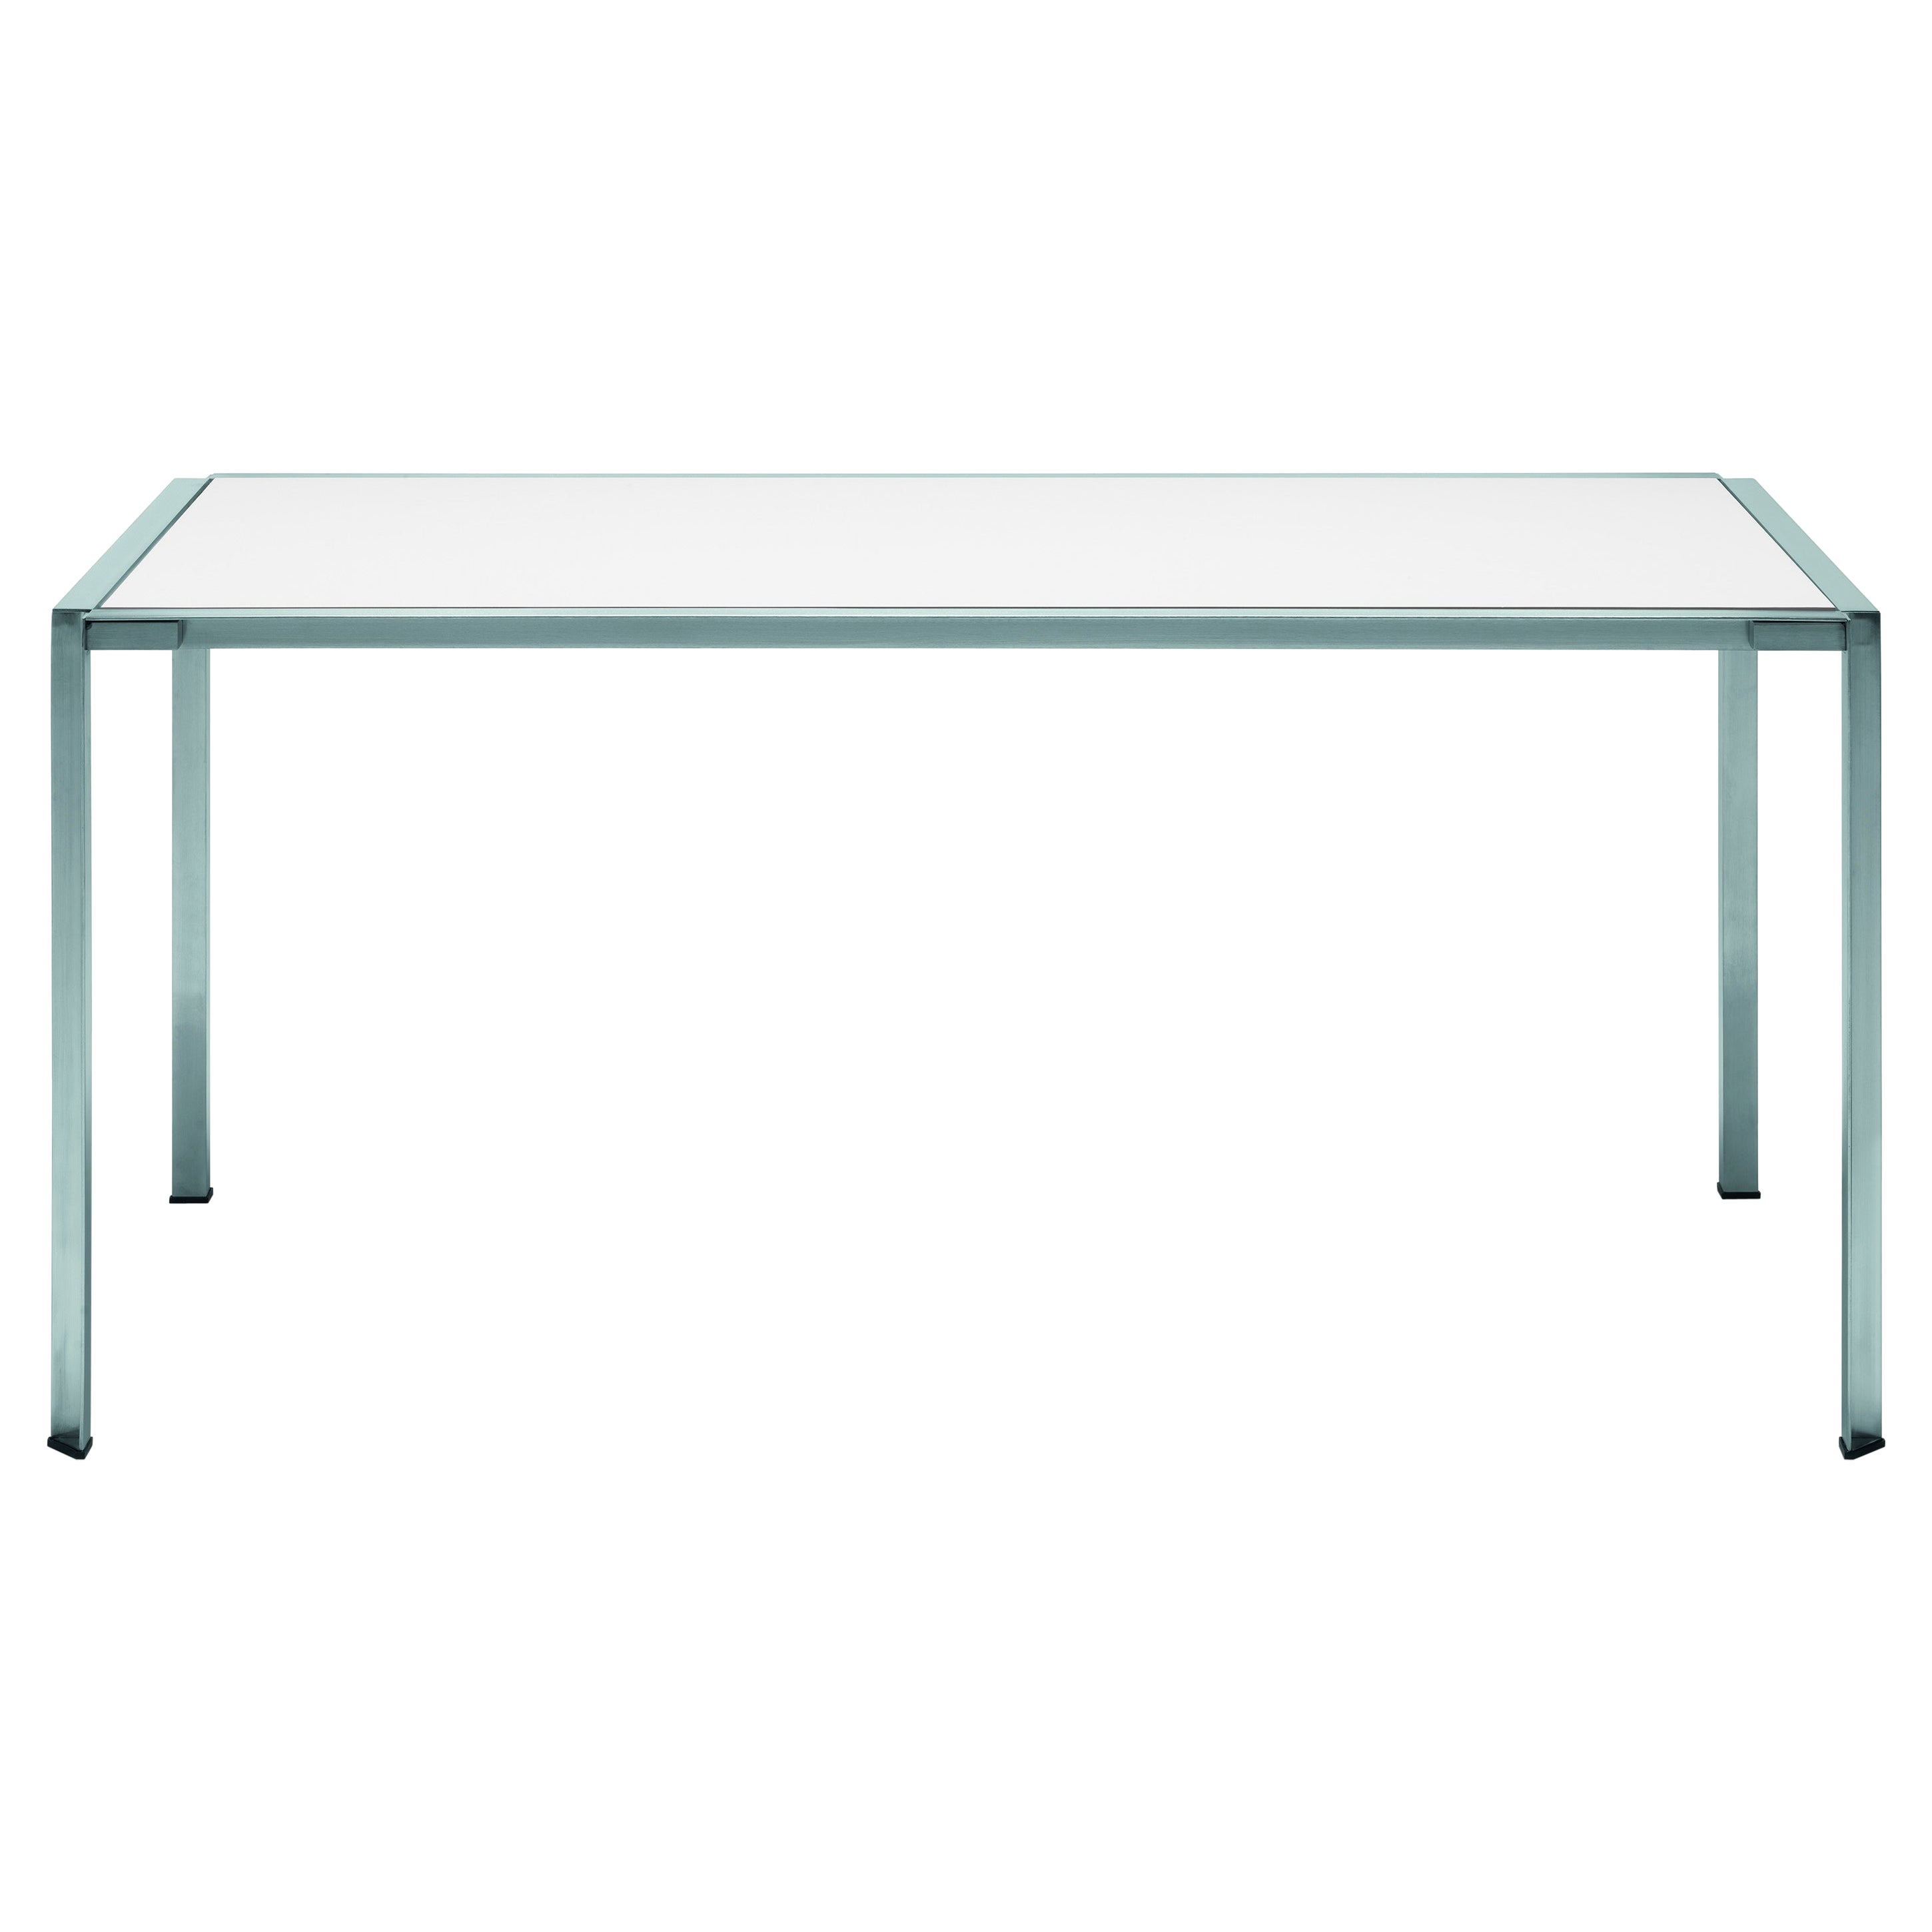 Table Alias 222_O verte avec cadre en acier inoxydable brossé et plateau en Dekton 